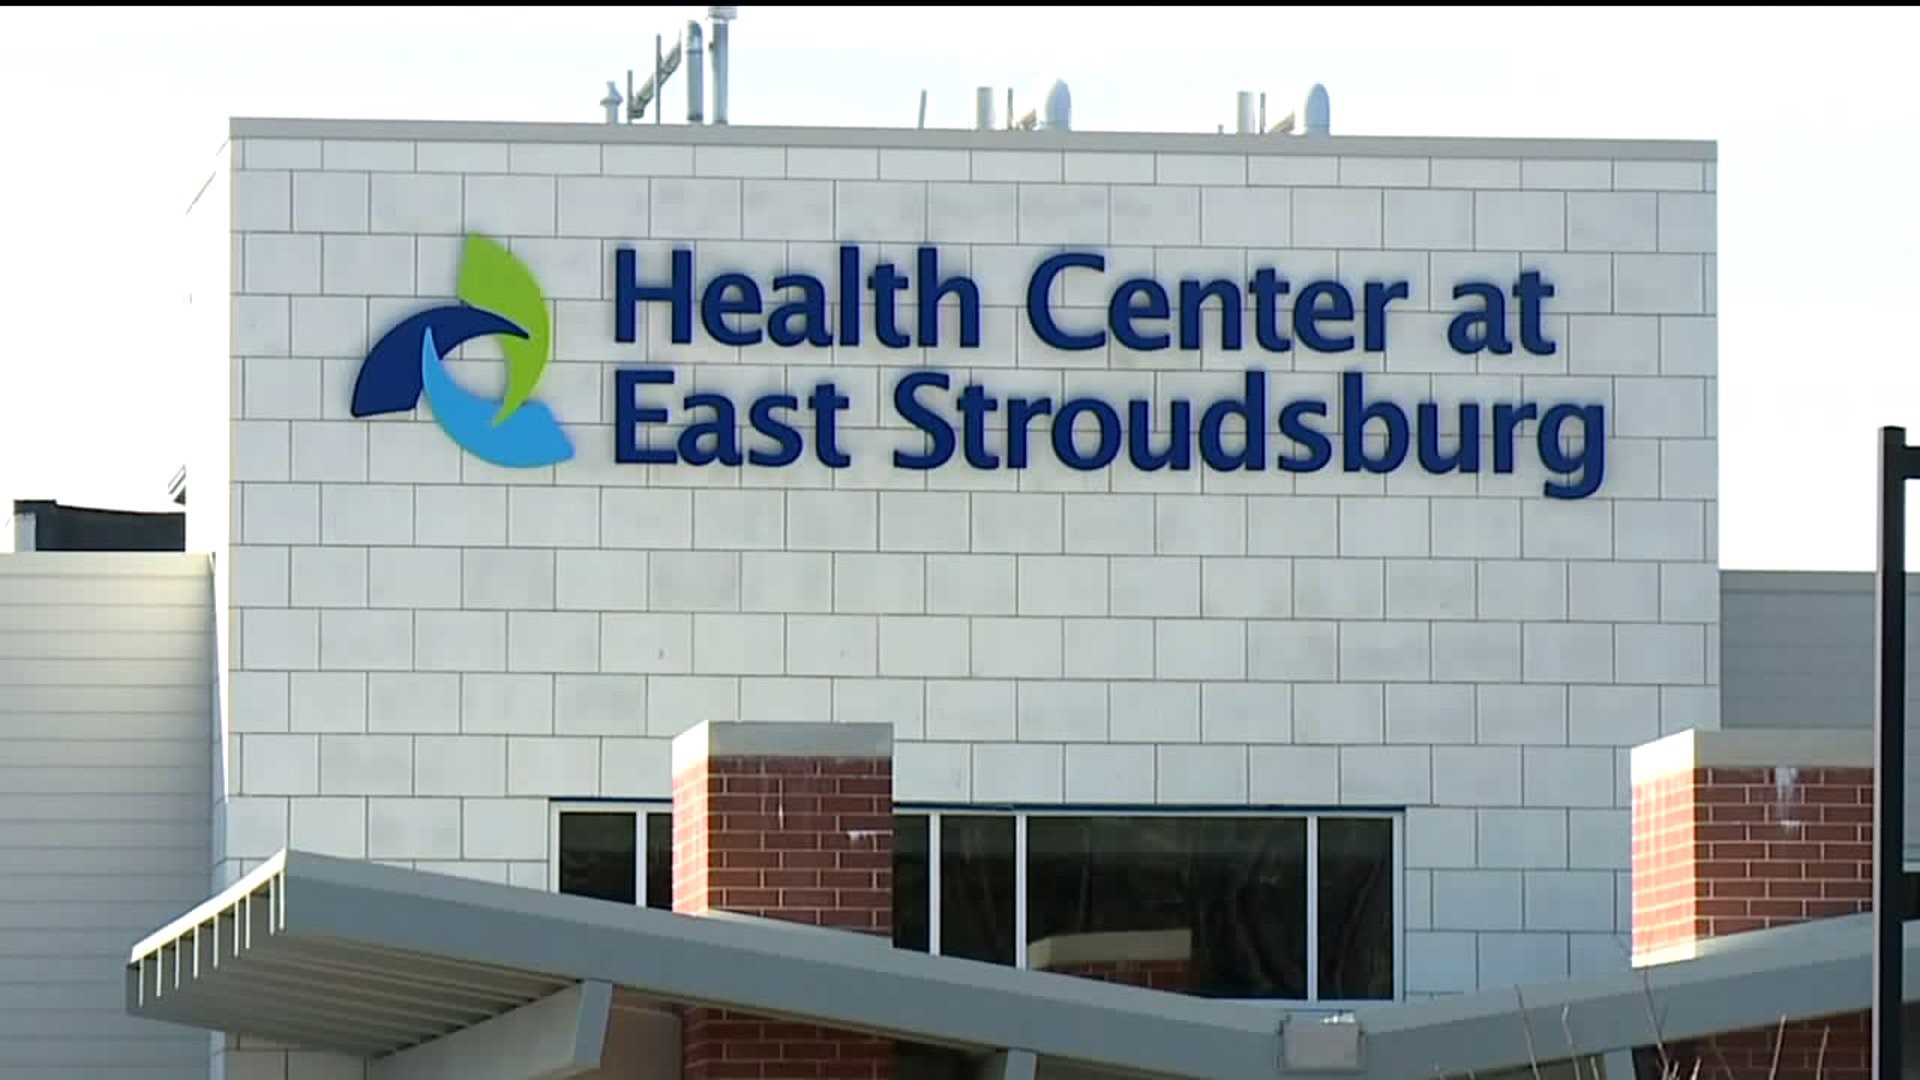 New Health Center Opens near East Stroudsburg